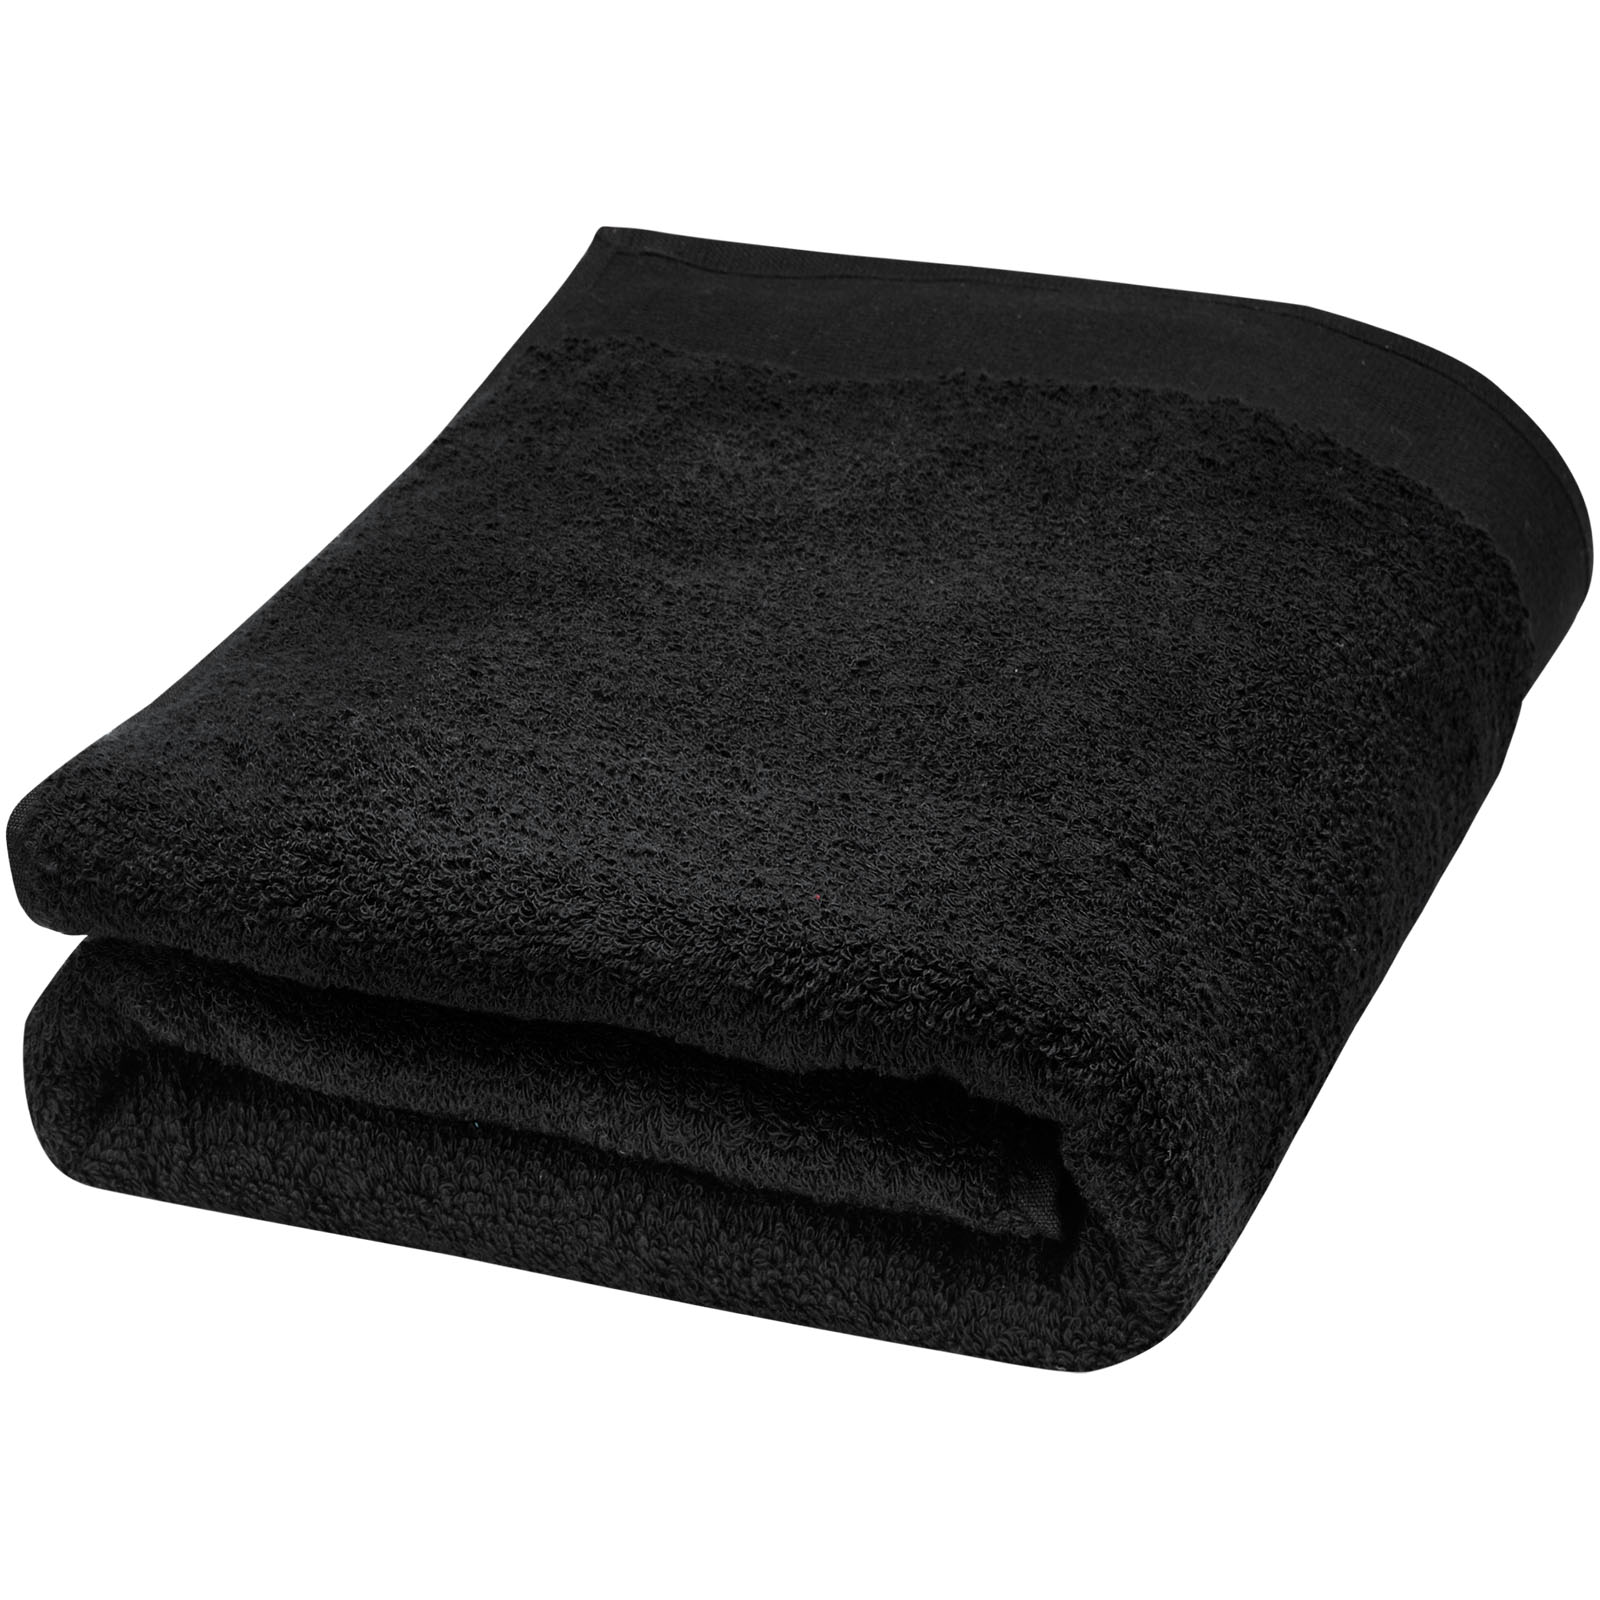 Ellie 550 g/m² håndklæde i bomuld 70x140 cm